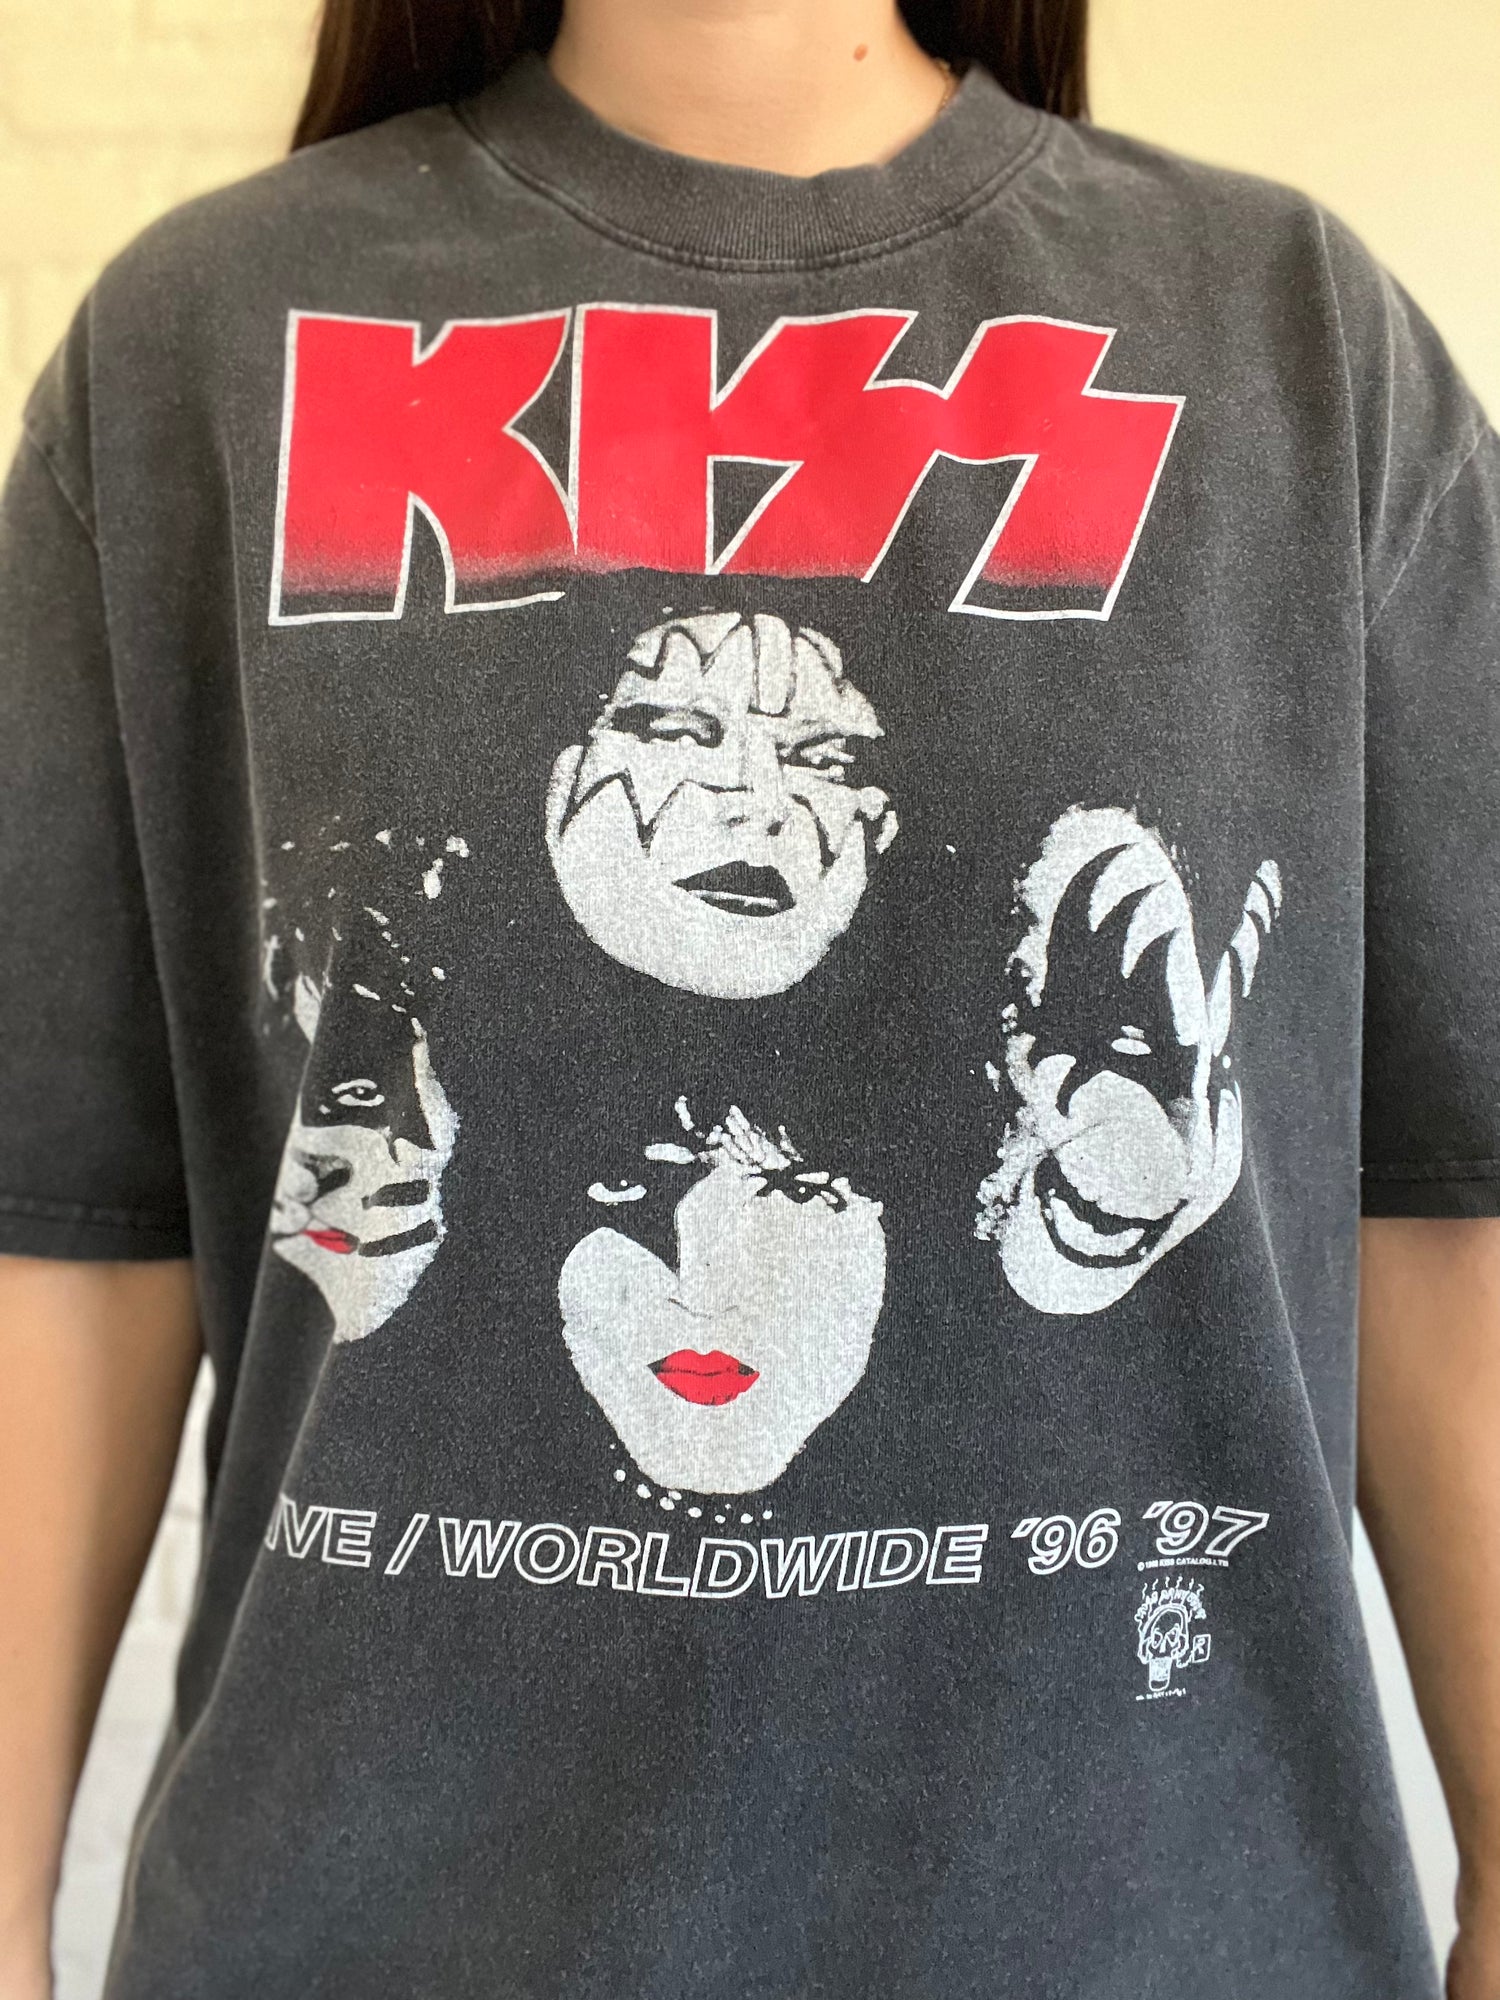 Vintage 90s KISS Alive Worldwide '96 '97 - XL